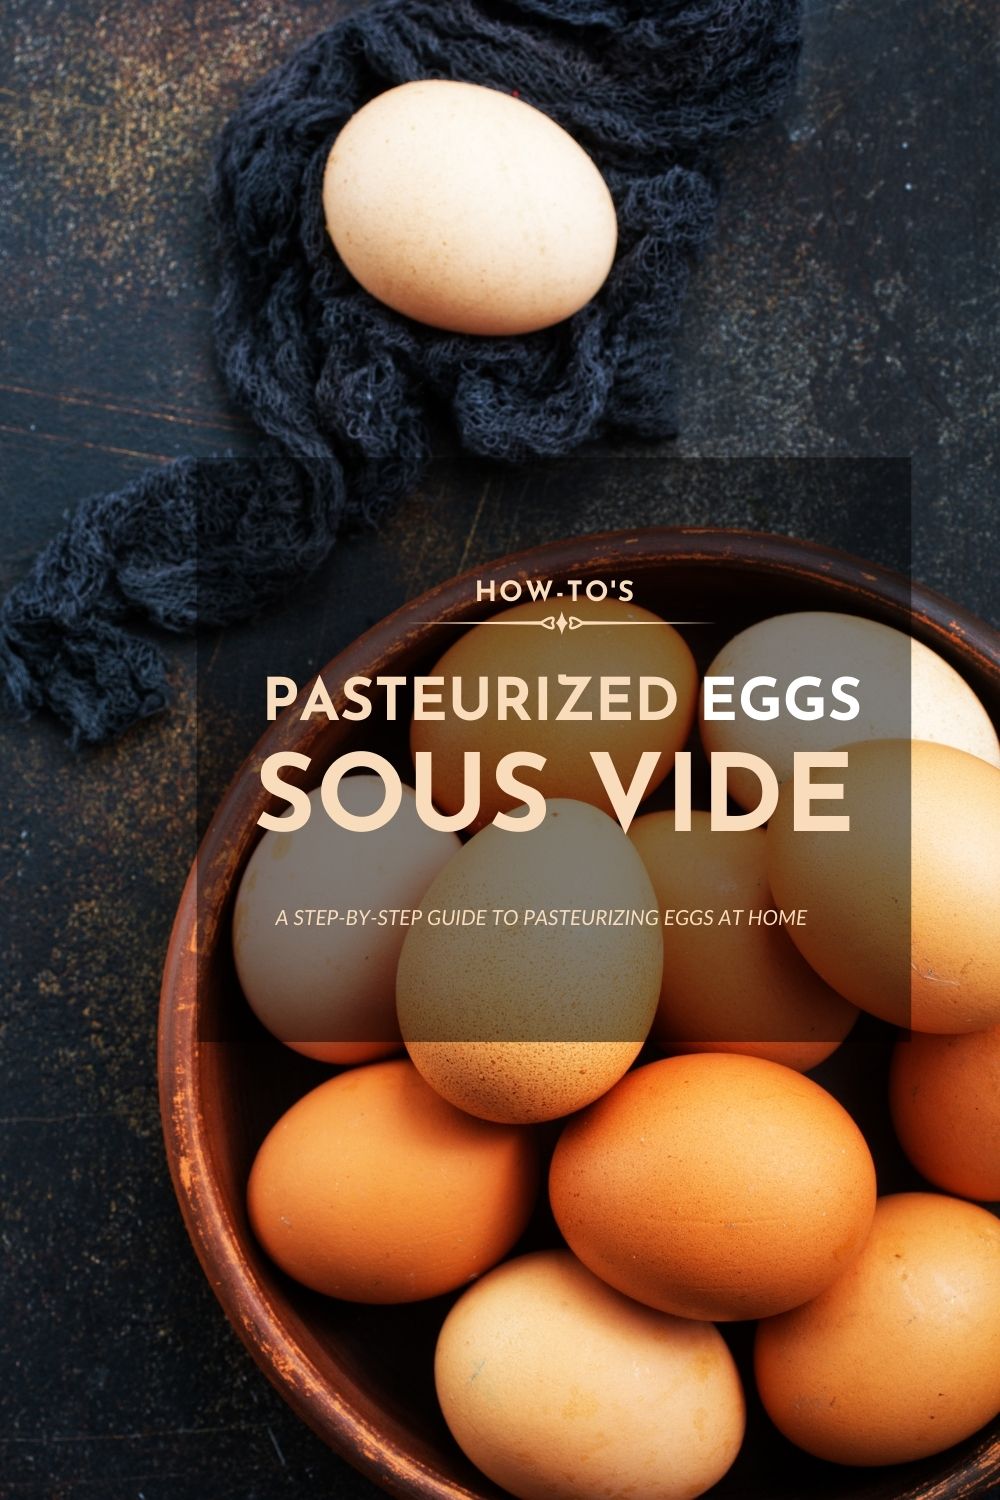 https://www.streetsmartkitchen.com/wp-content/uploads/How-to-Pasteurize-Eggs-Sous-Vide-.jpeg